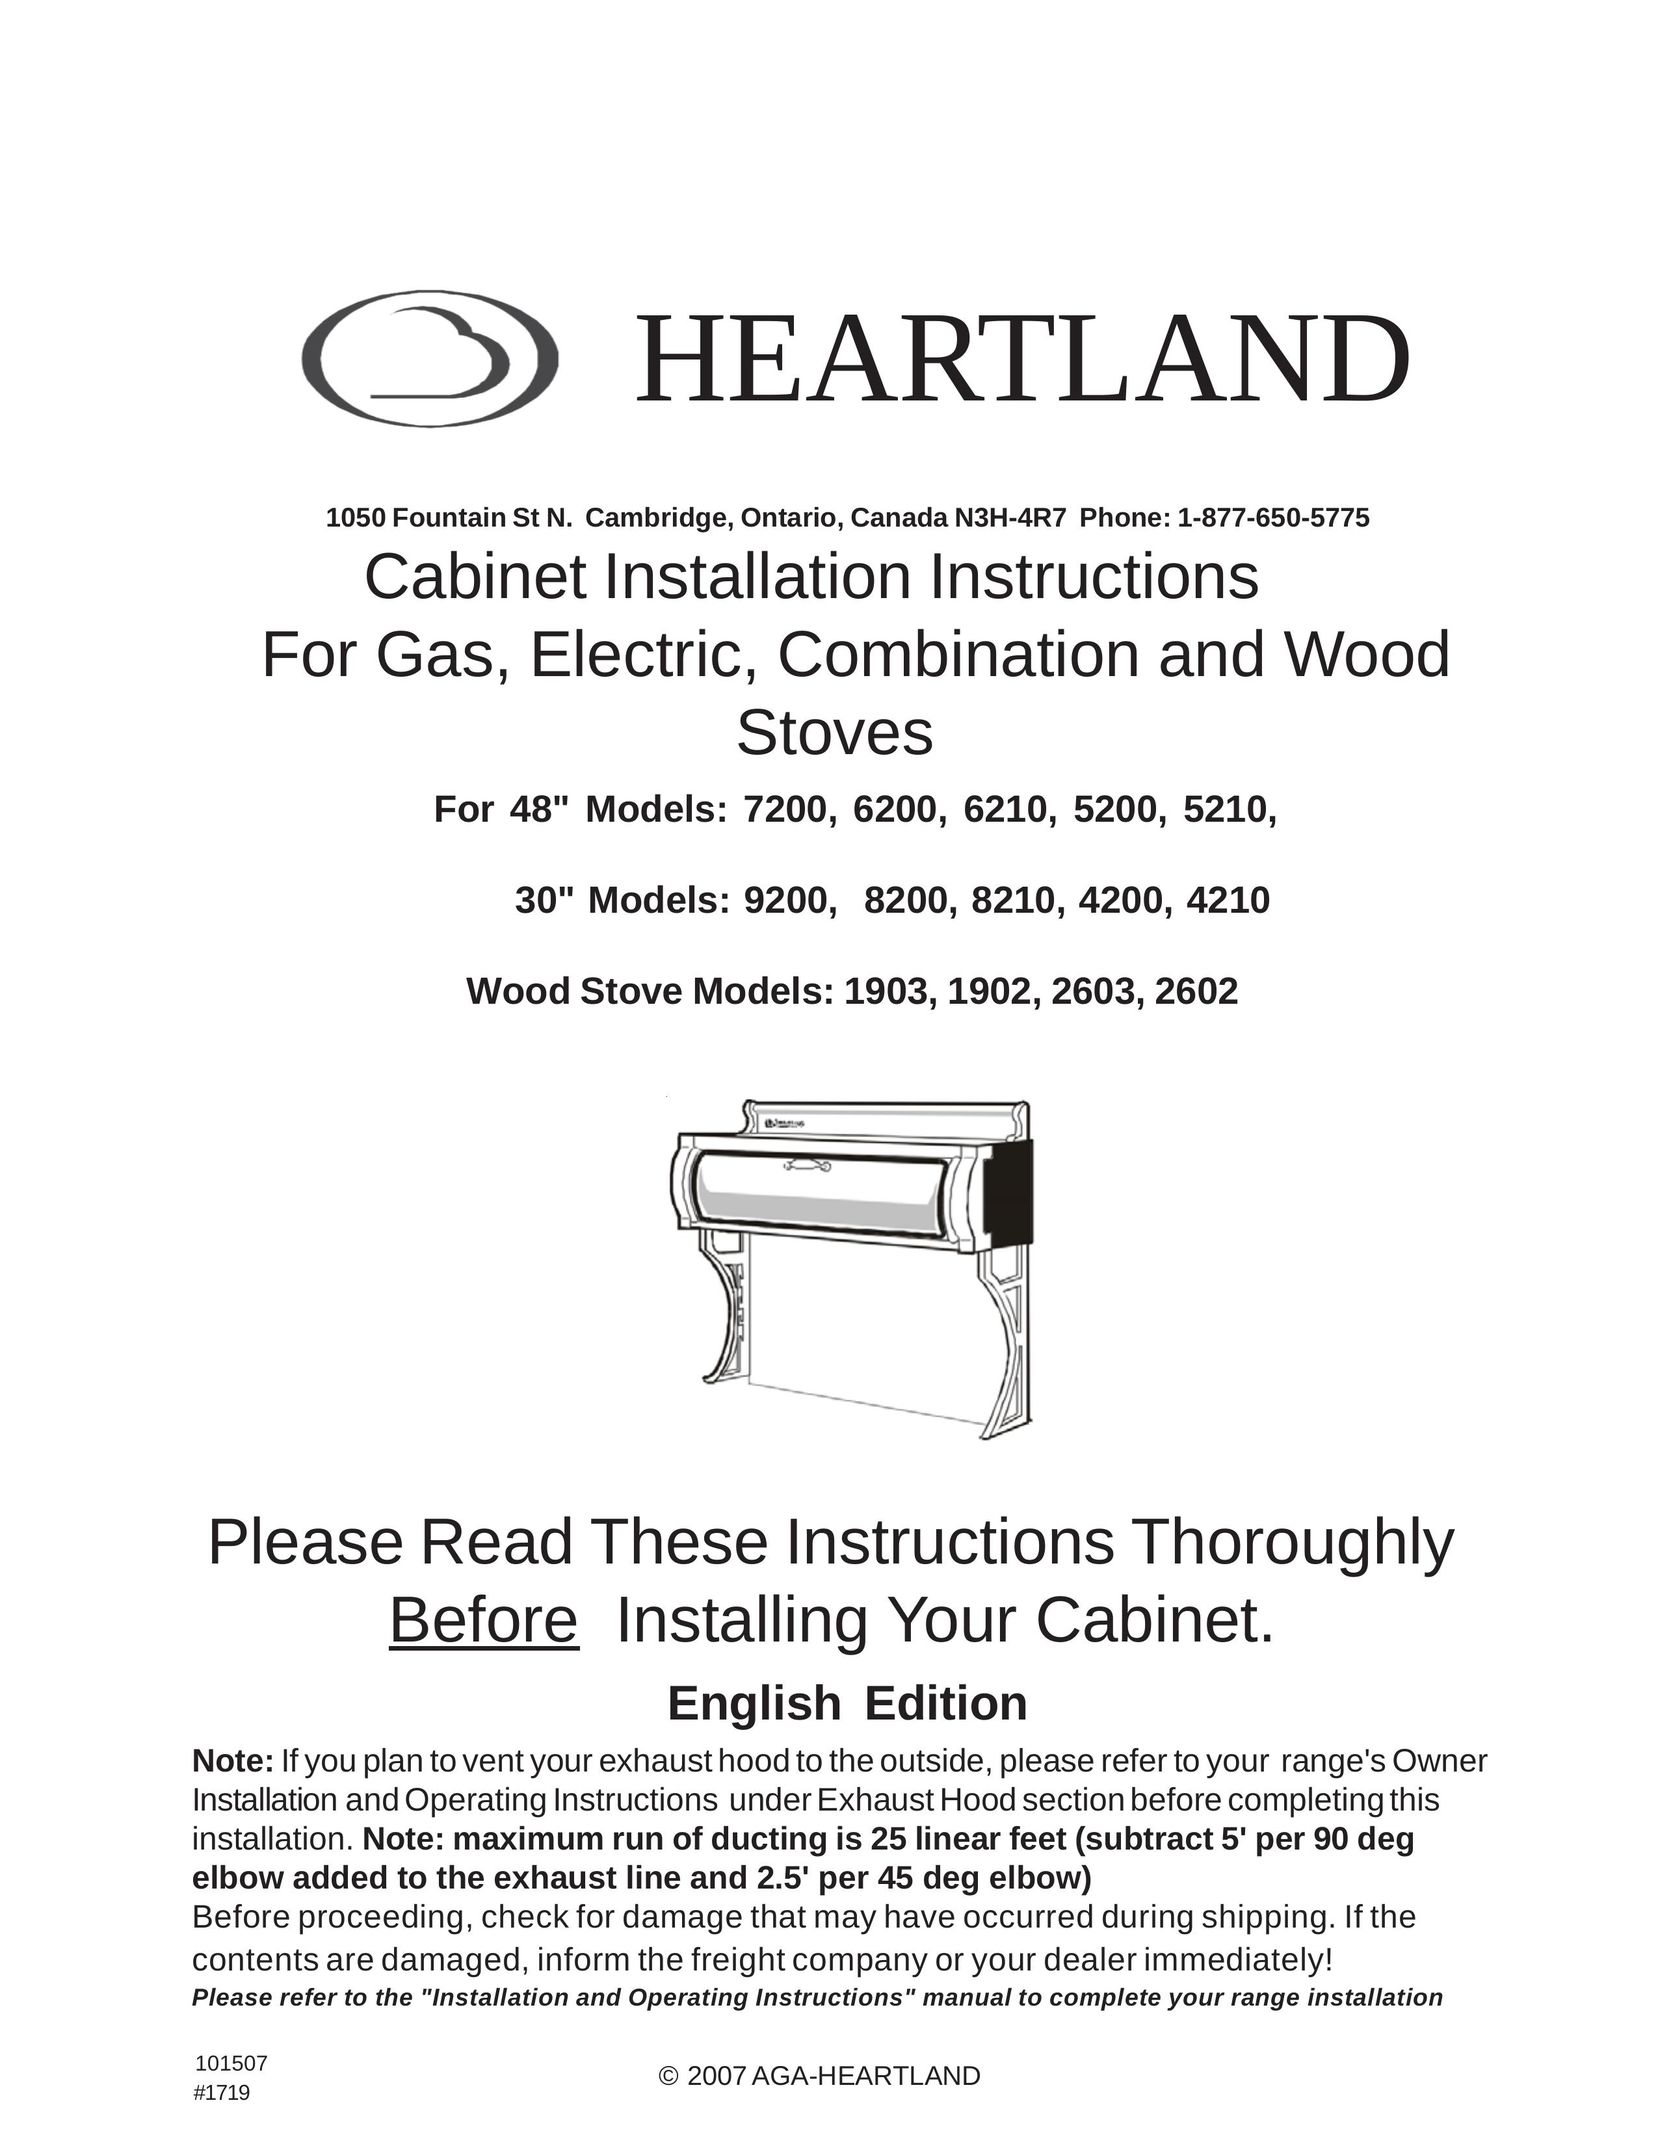 Heartland 2602 Stove User Manual